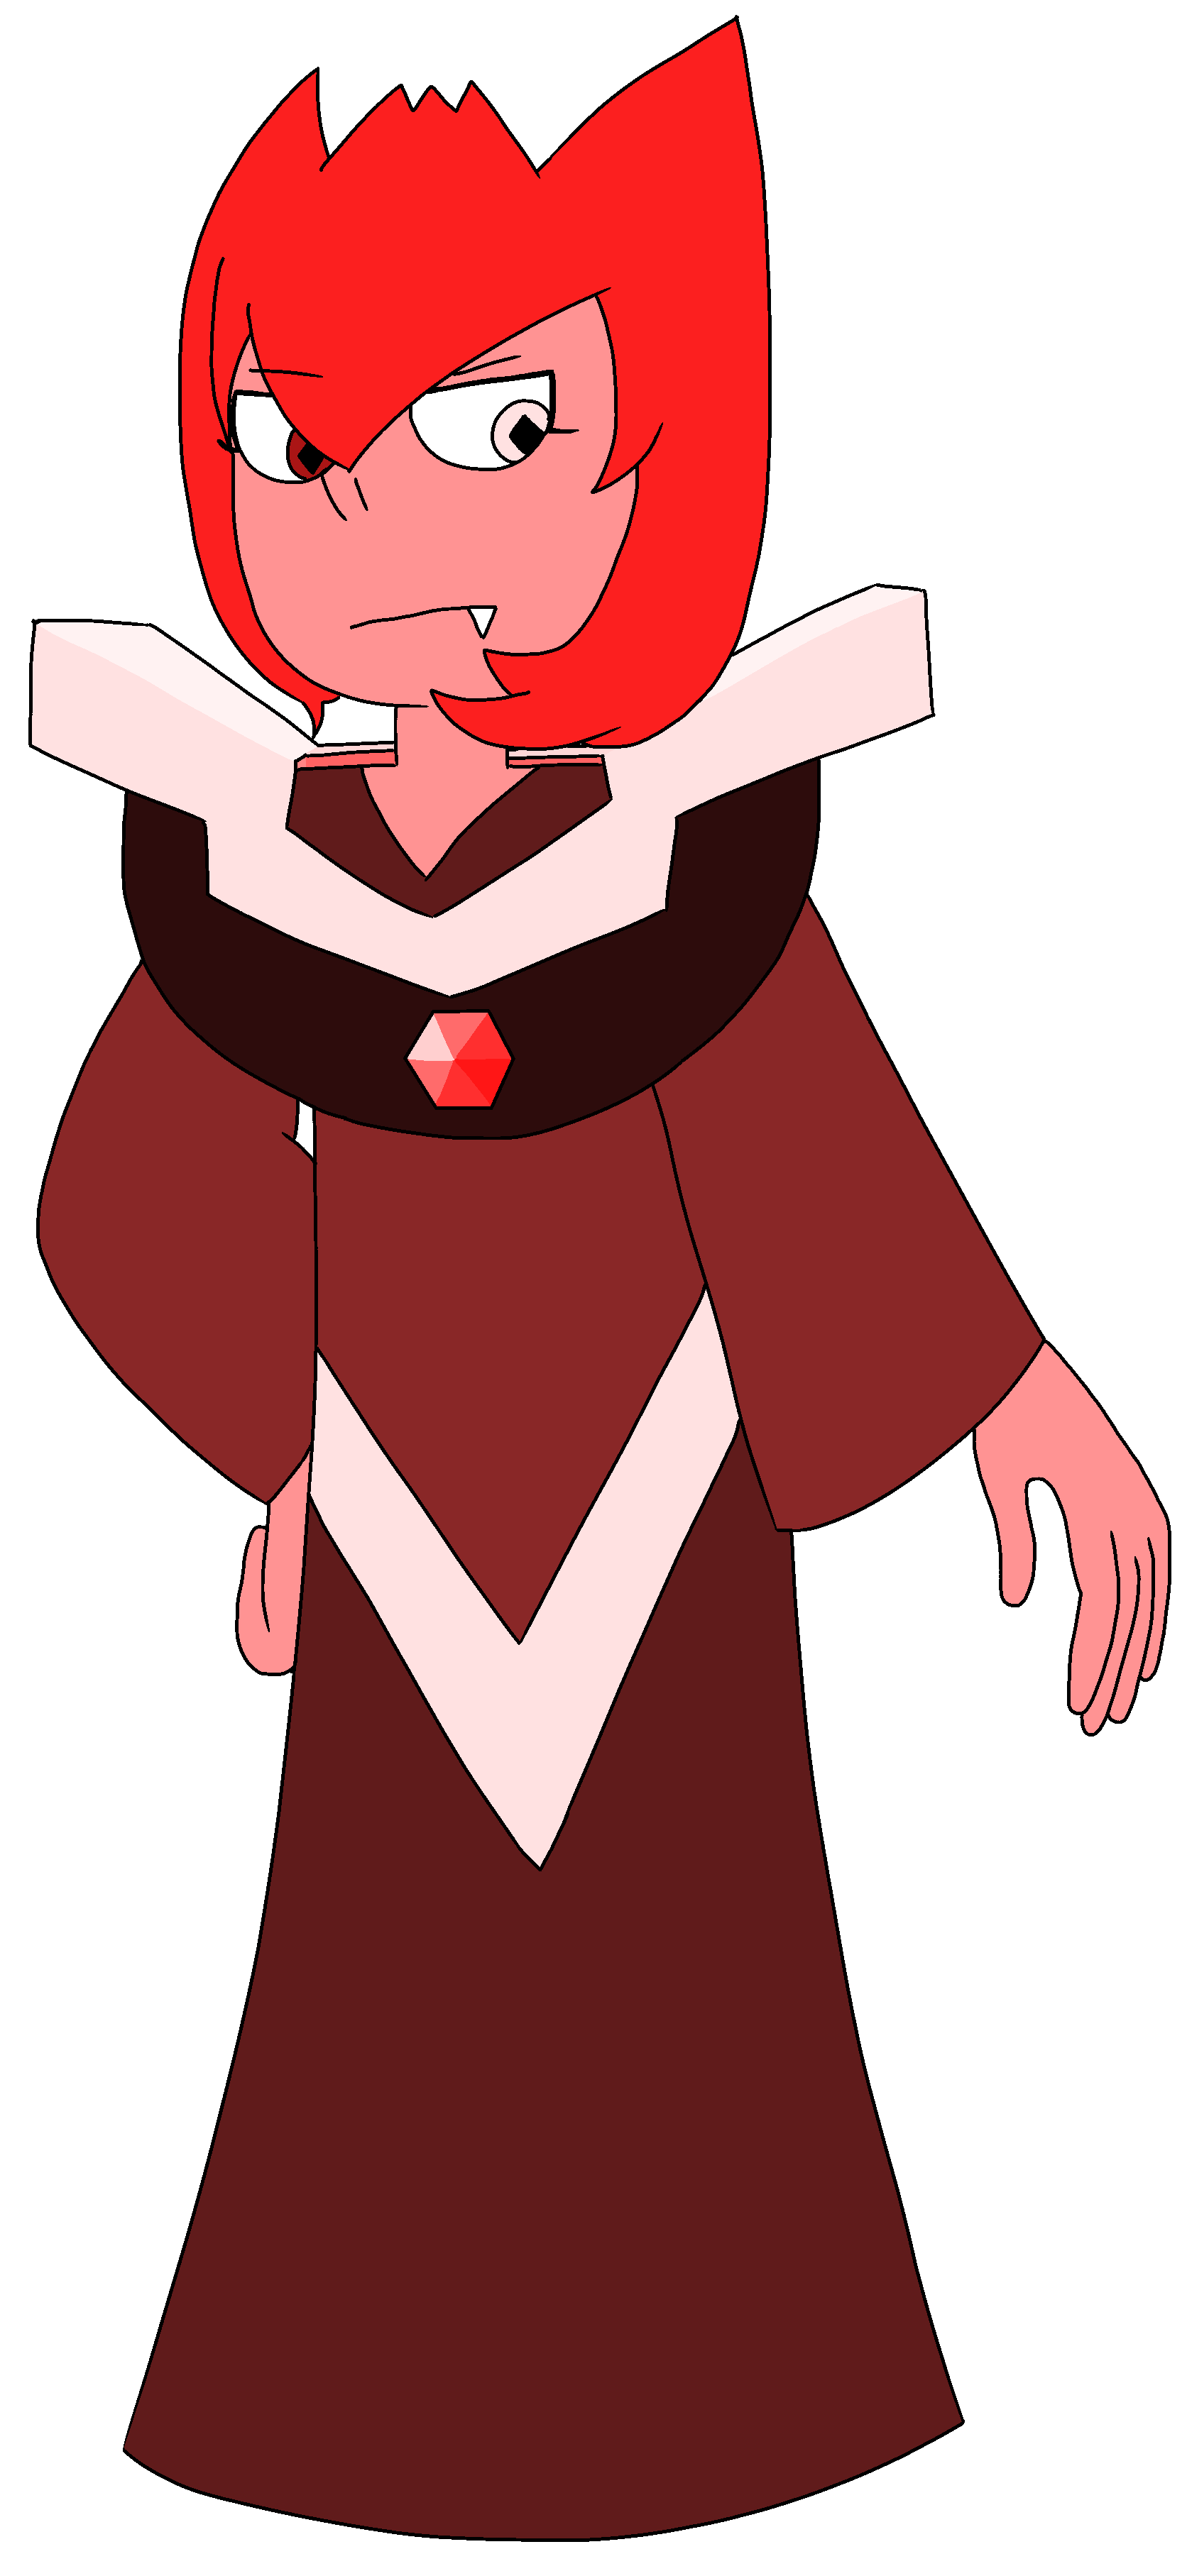 Anme with Red Diamond Logo - Red Diamond | Hidden Crystal Gems Wiki | FANDOM powered by Wikia